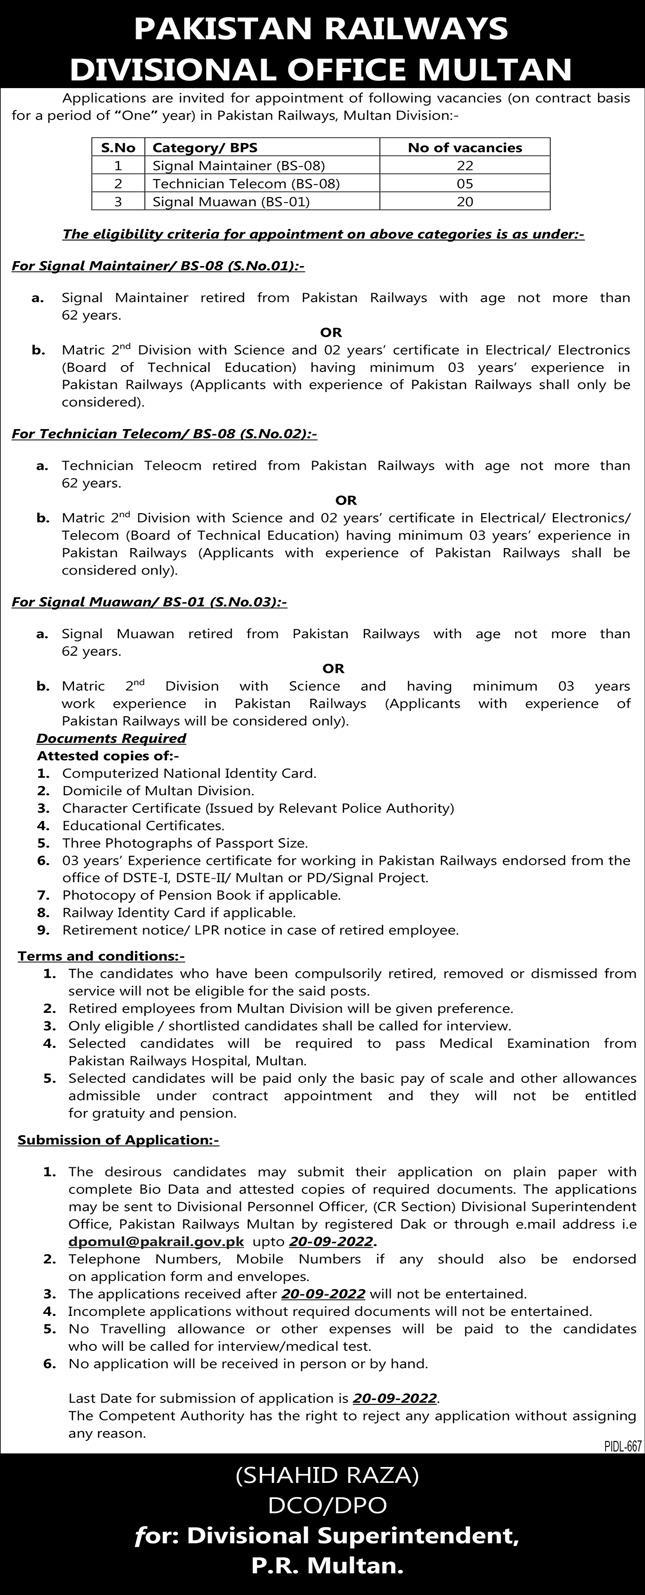 Pakistan Railway Division office jobs 2022 apply now